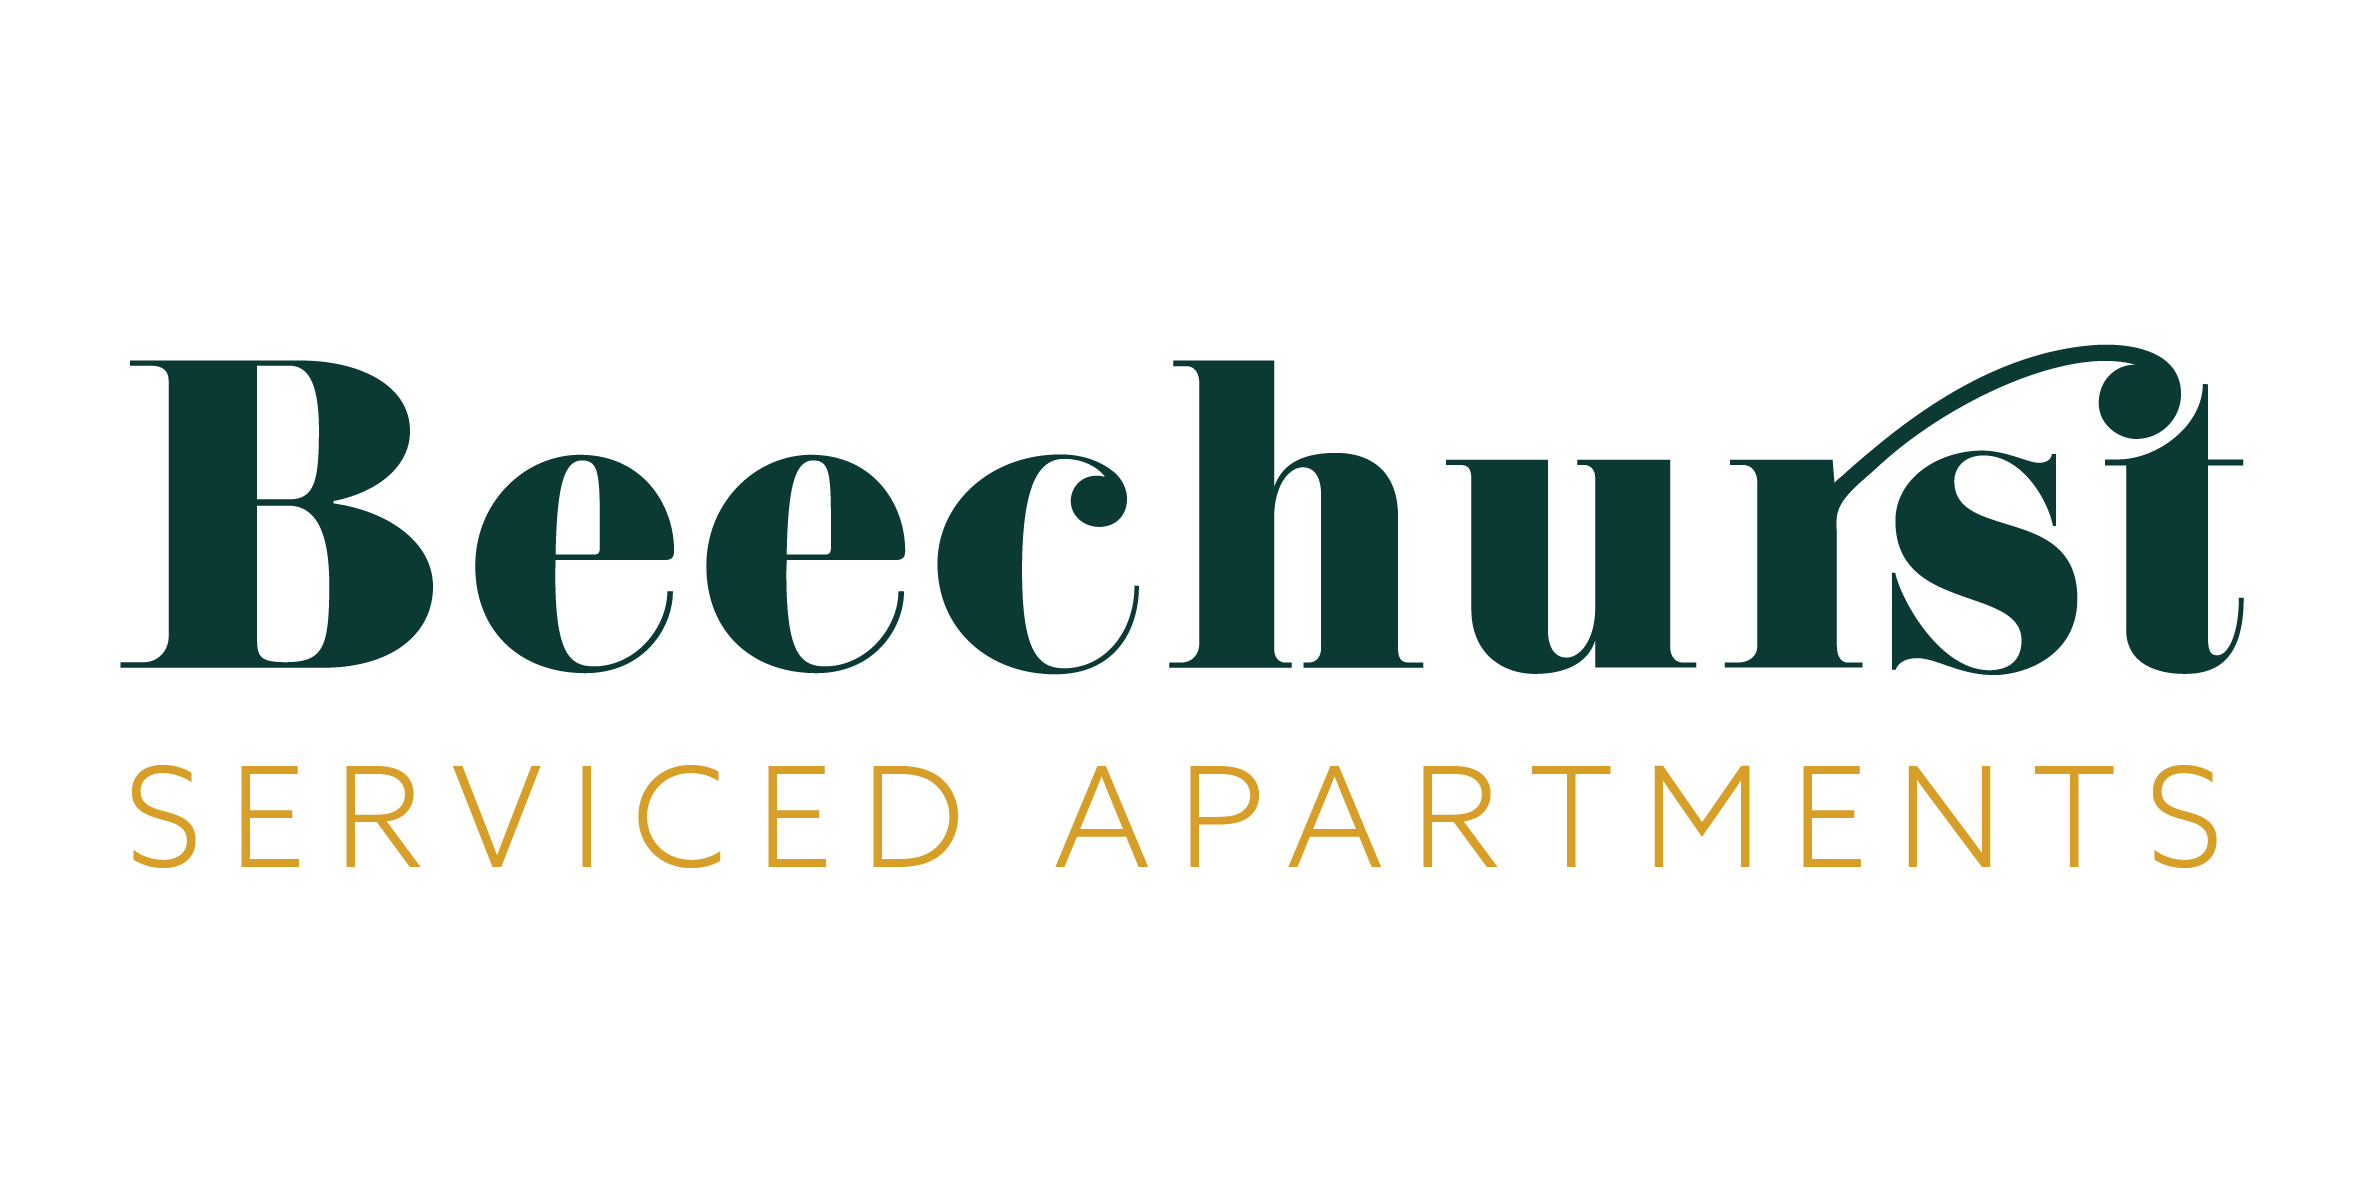 Beechurst Serviced Apartments